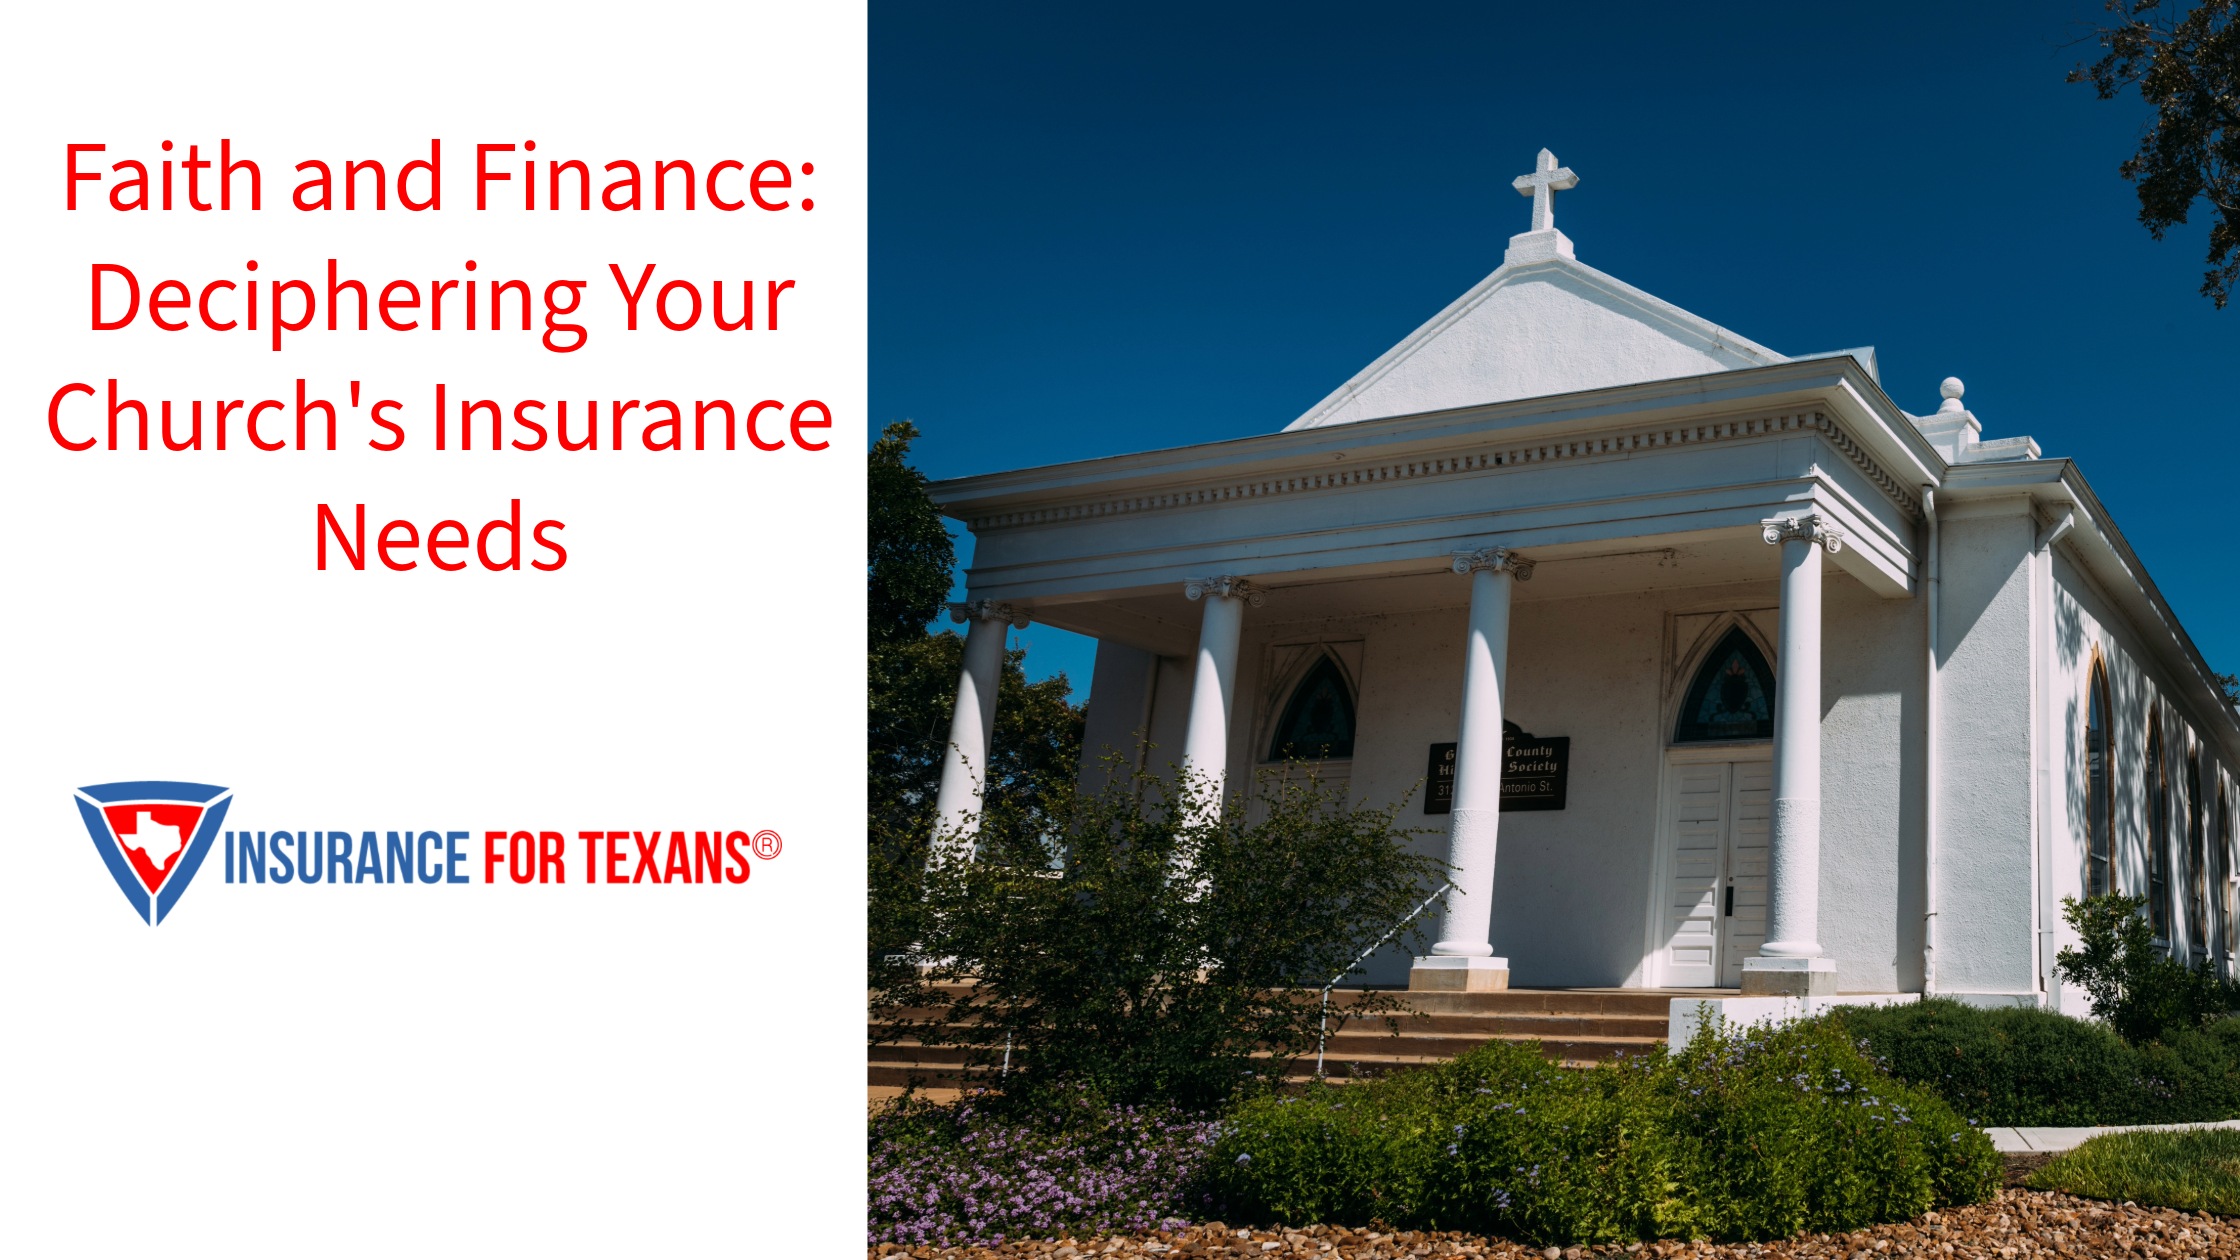 Faith and Finance: Deciphering Your Church's Insurance Needs